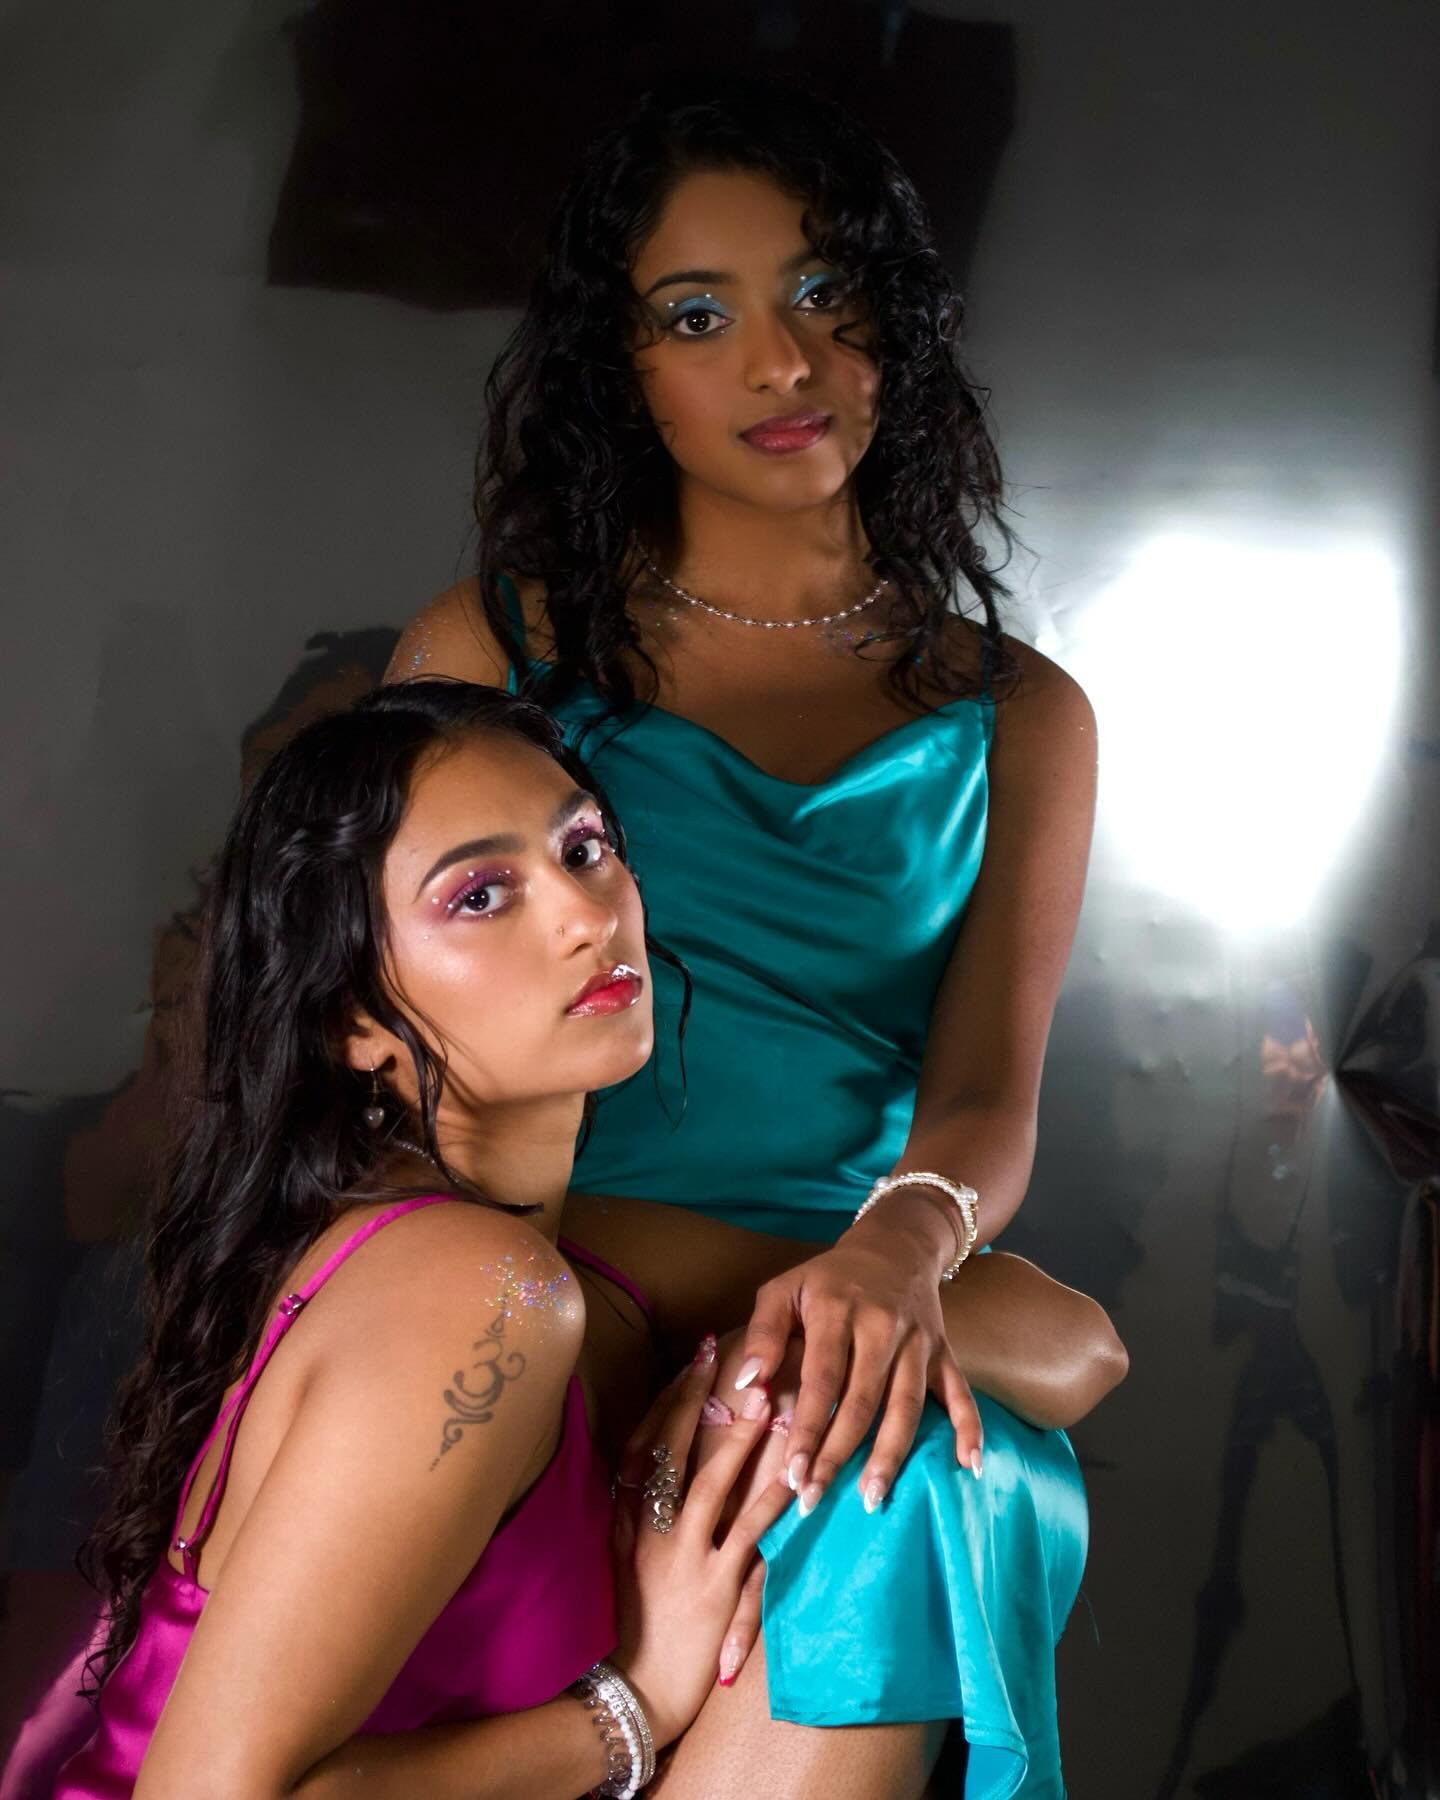 Come out to our profit share TOMORROW at The Corner on Northgate, 10pm-12am! See you for drinks🥂🤭

Photography: @rayan.1832 
Concept: @_divyaaa.nair_ &amp; @claravalkoun_ 
Styling: @shreya.tiruvidula &amp; @sudikshapai 
Models: @sudikshapai &amp; @